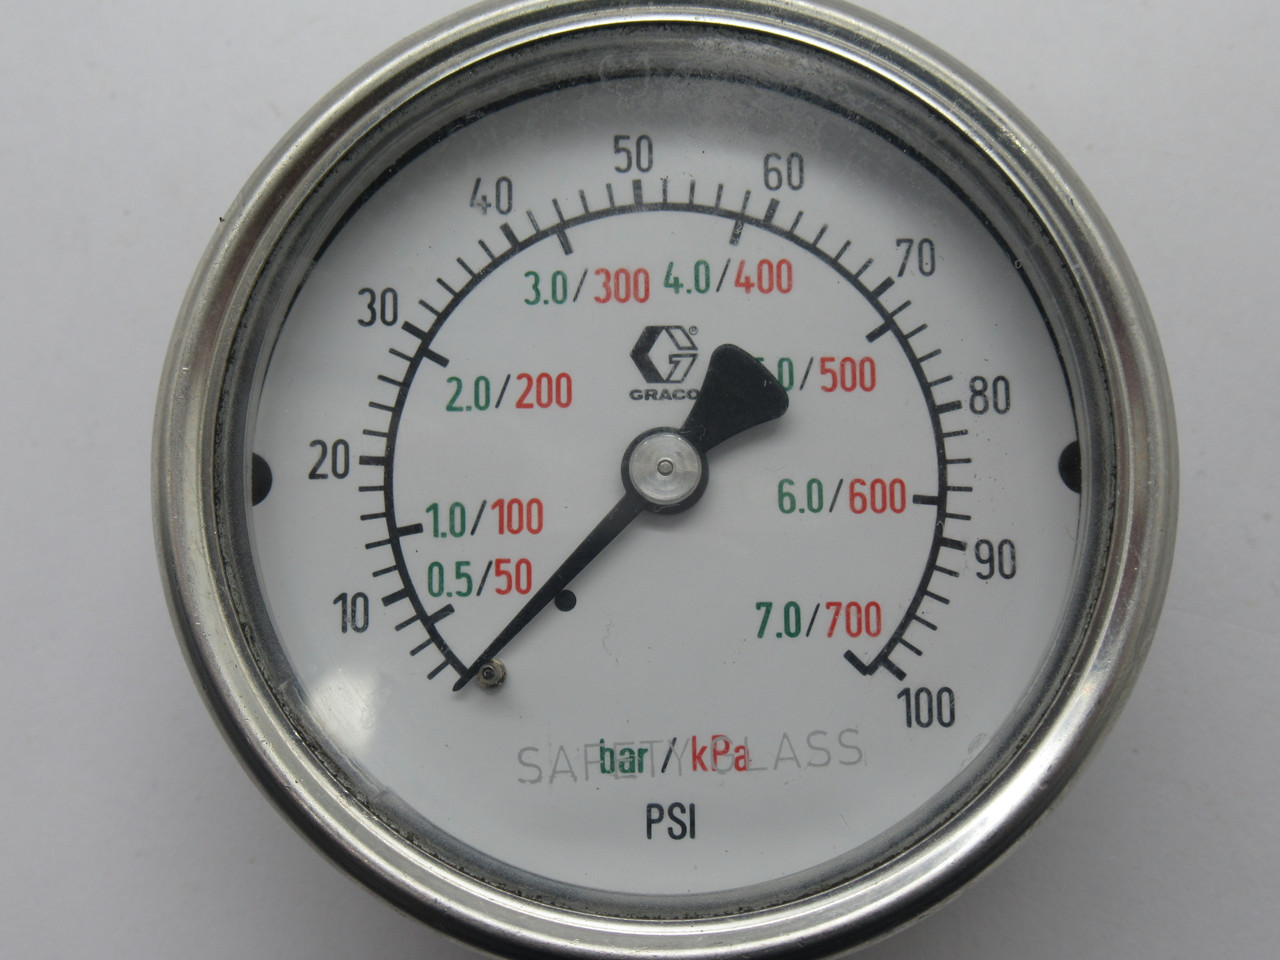 Graco 187874 Pressure Gauge 0-100psi 2-1/2" Diameter 3/8" Adapter USED